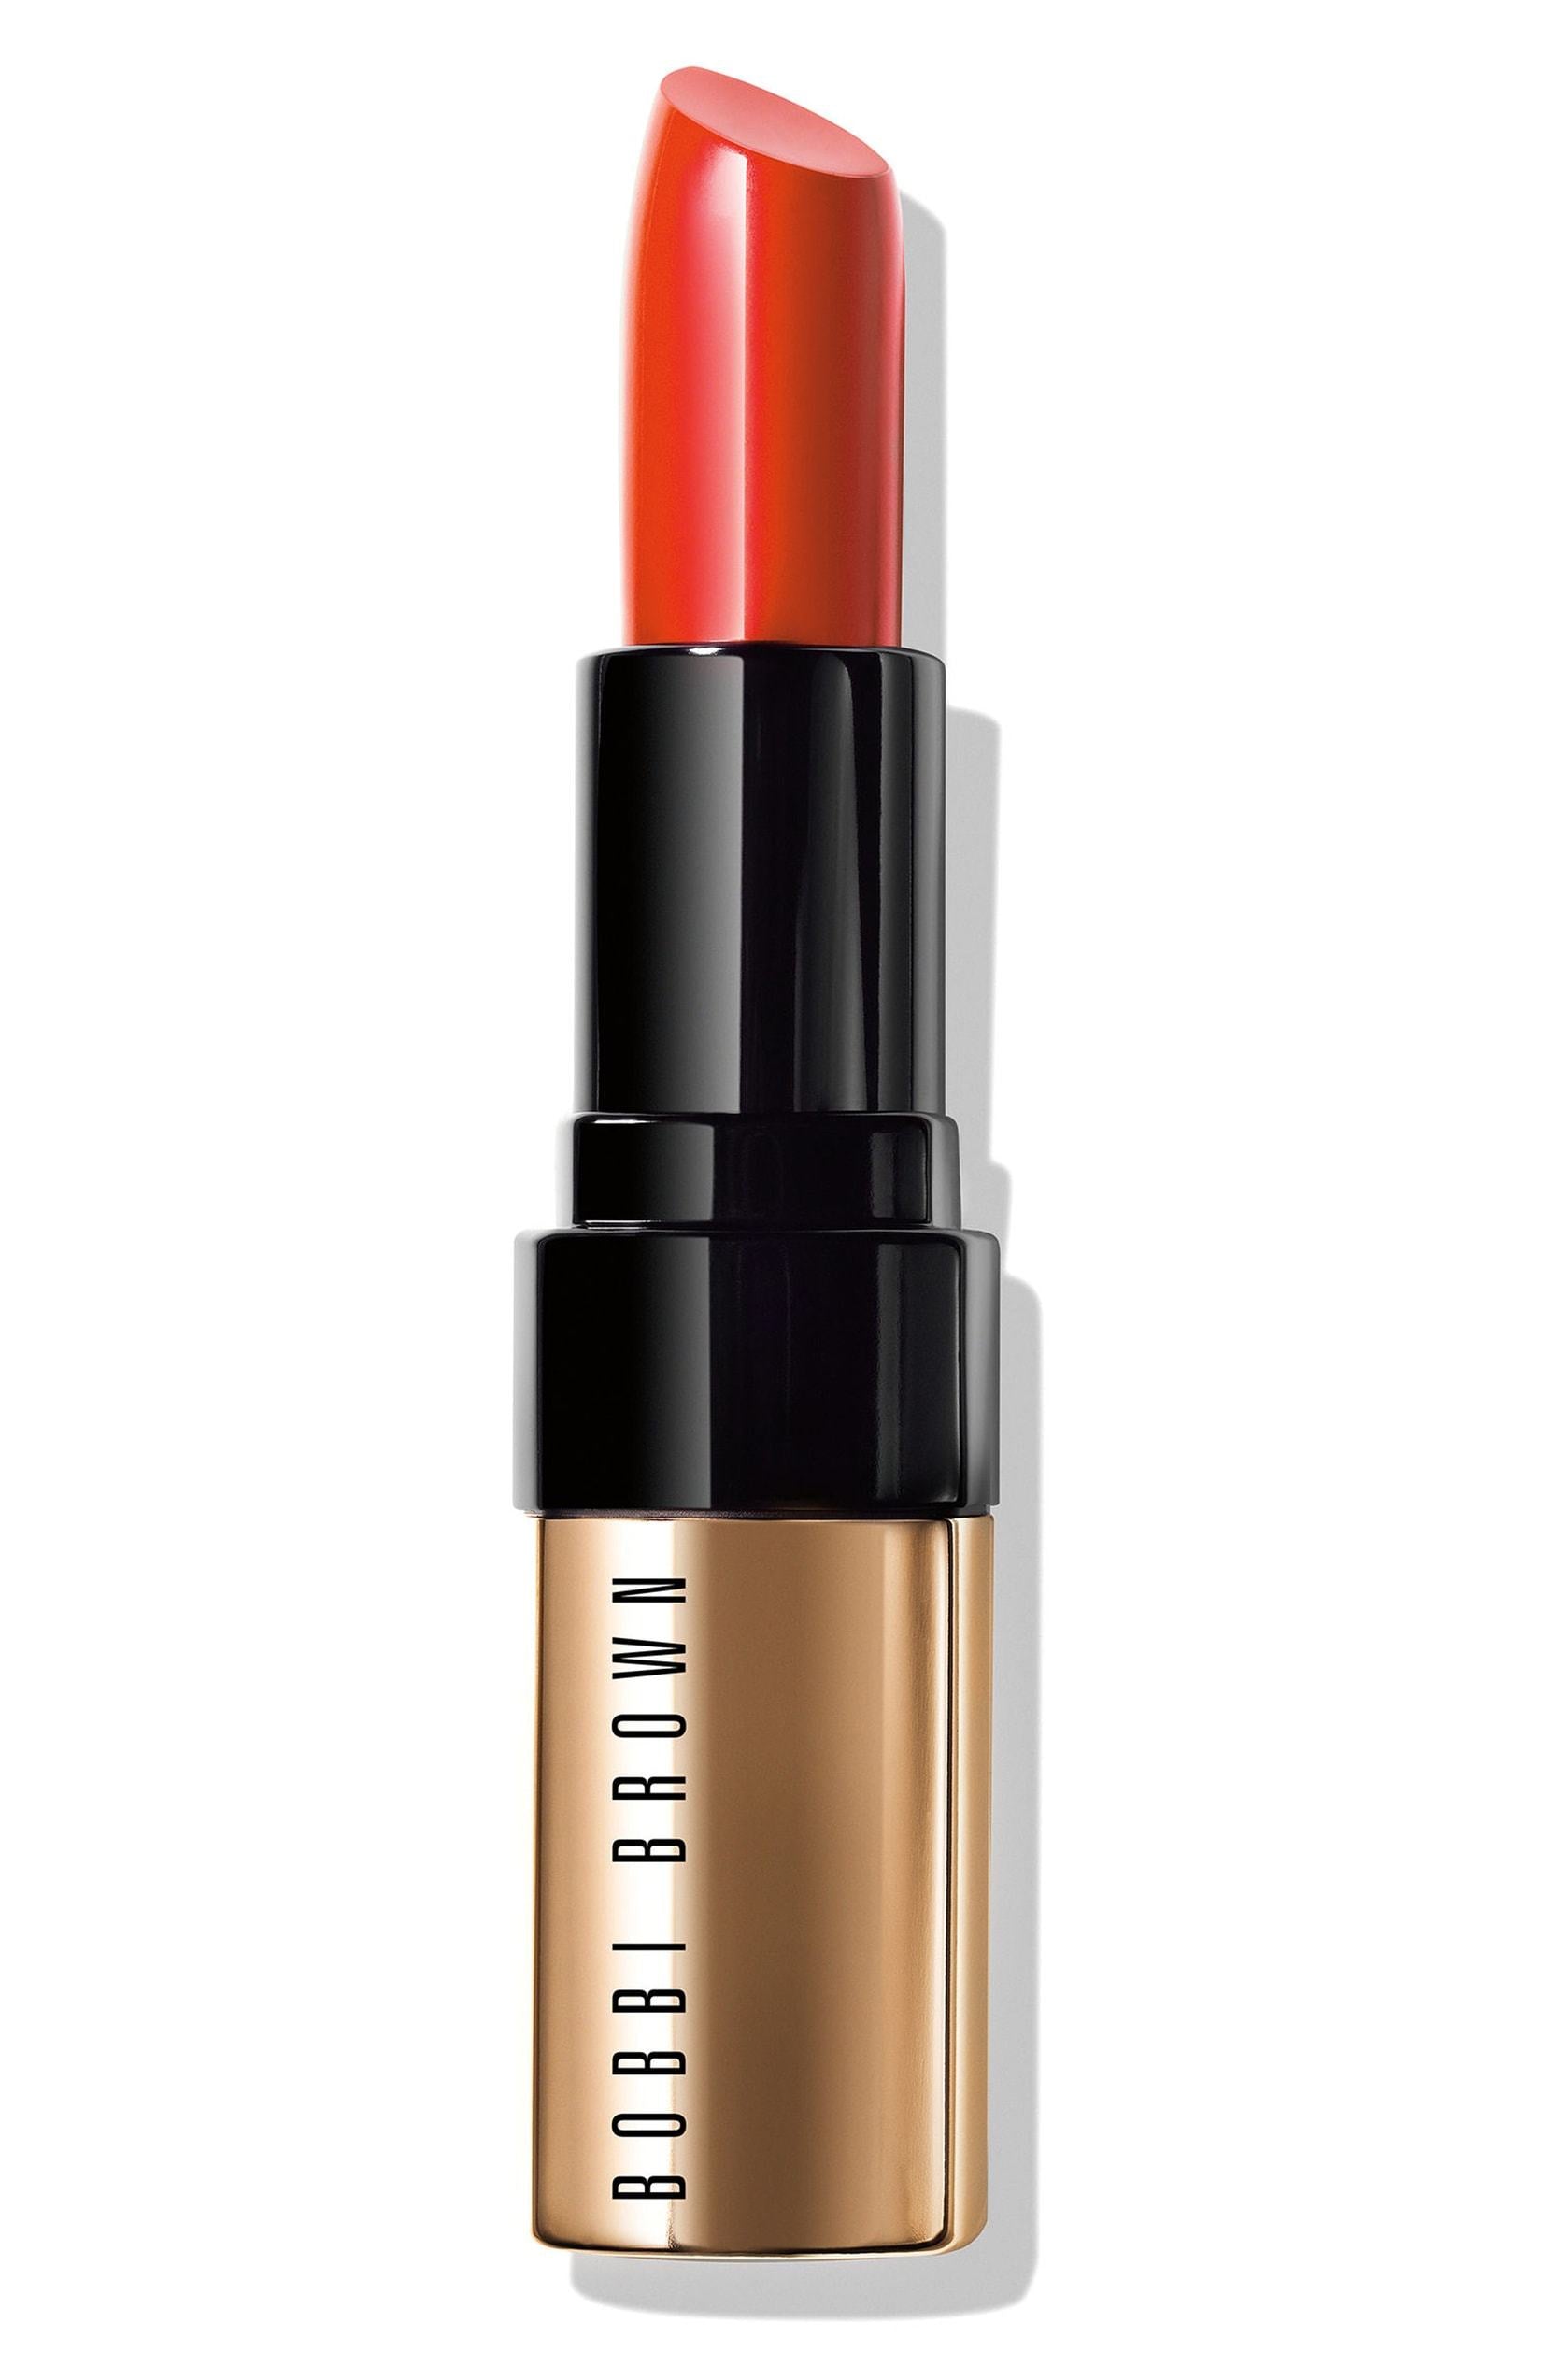 Bobbi Brown Luxe Lip Color - eCosmeticWorld